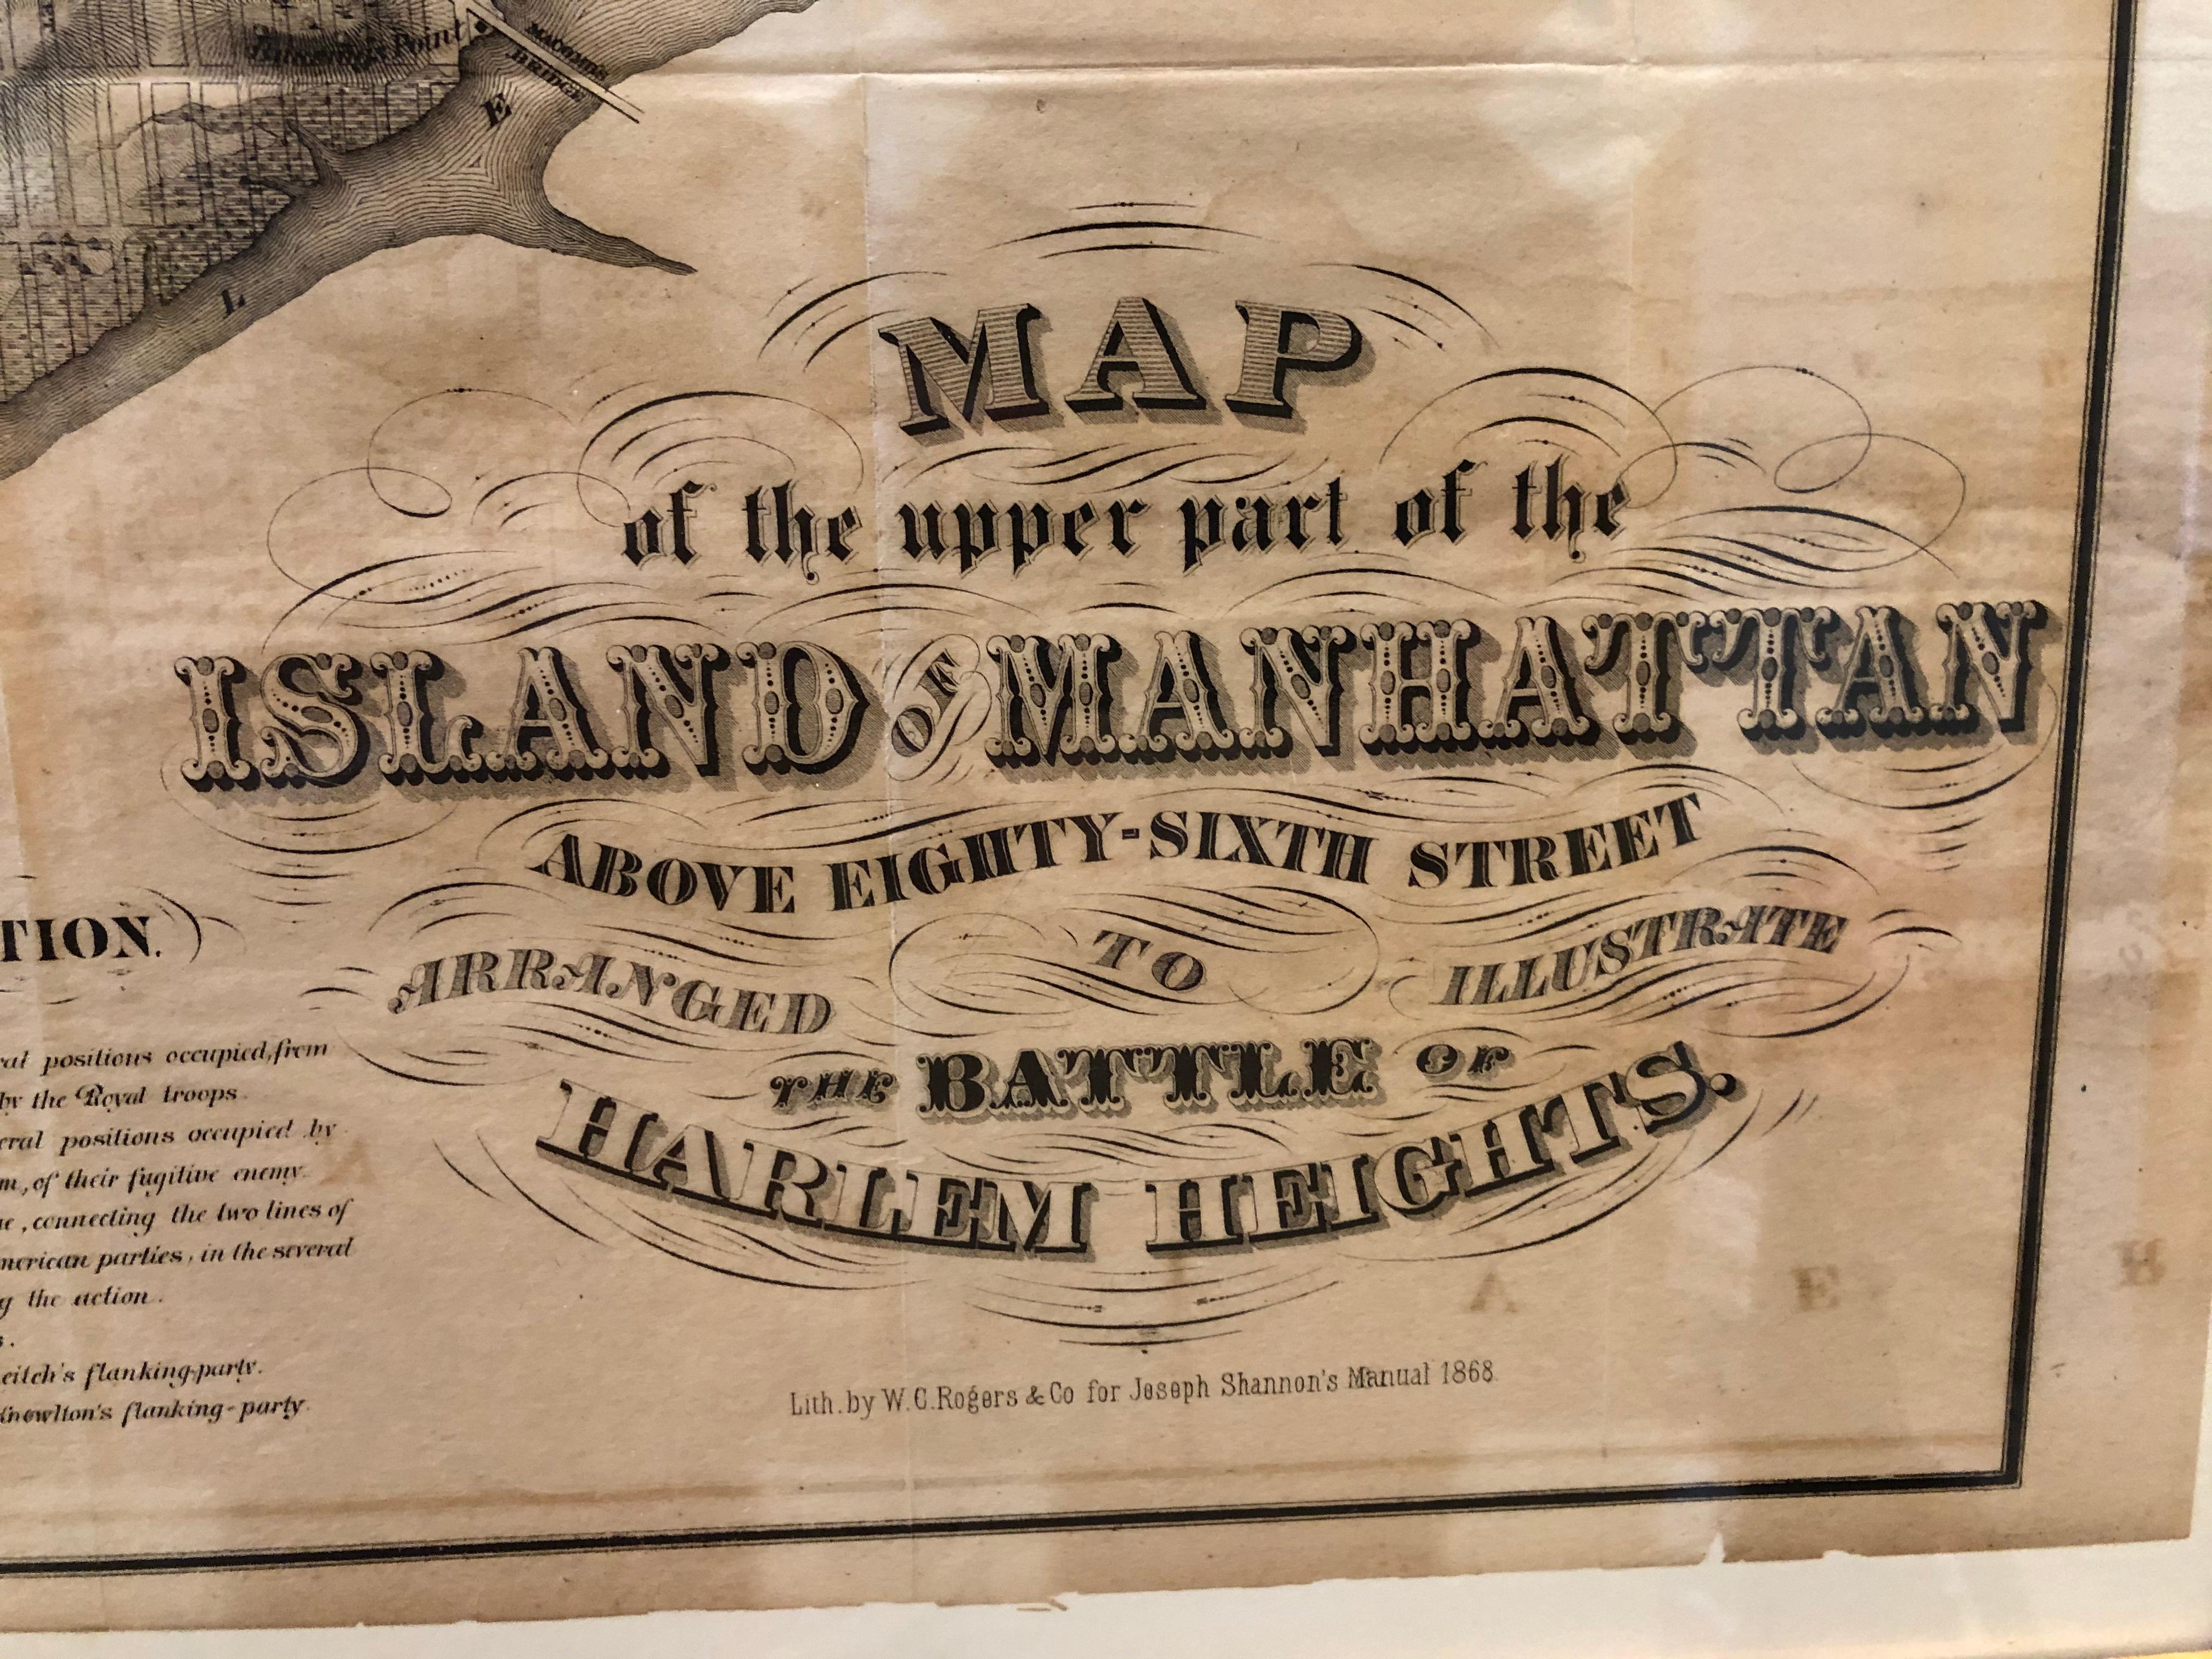 1864 reykjavik map 2 streets